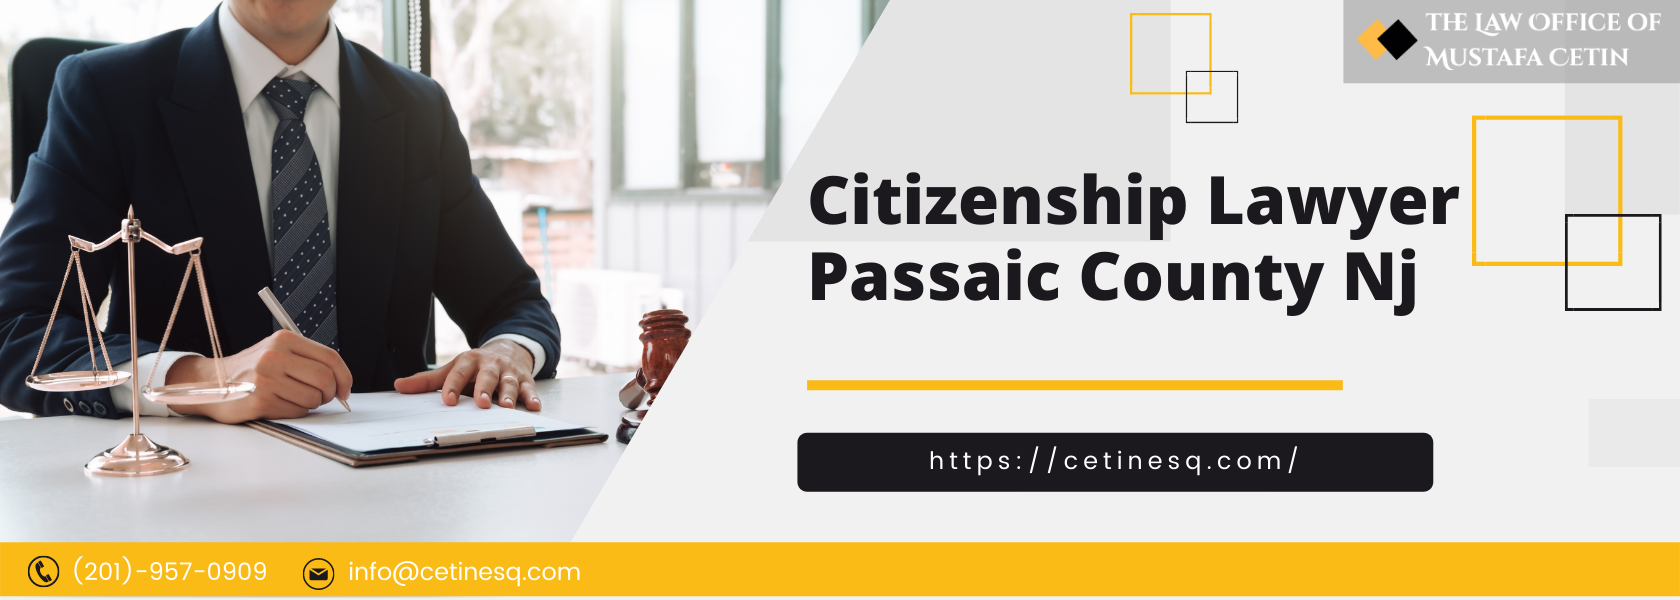 Citizenship Lawyer Passaic County Nj